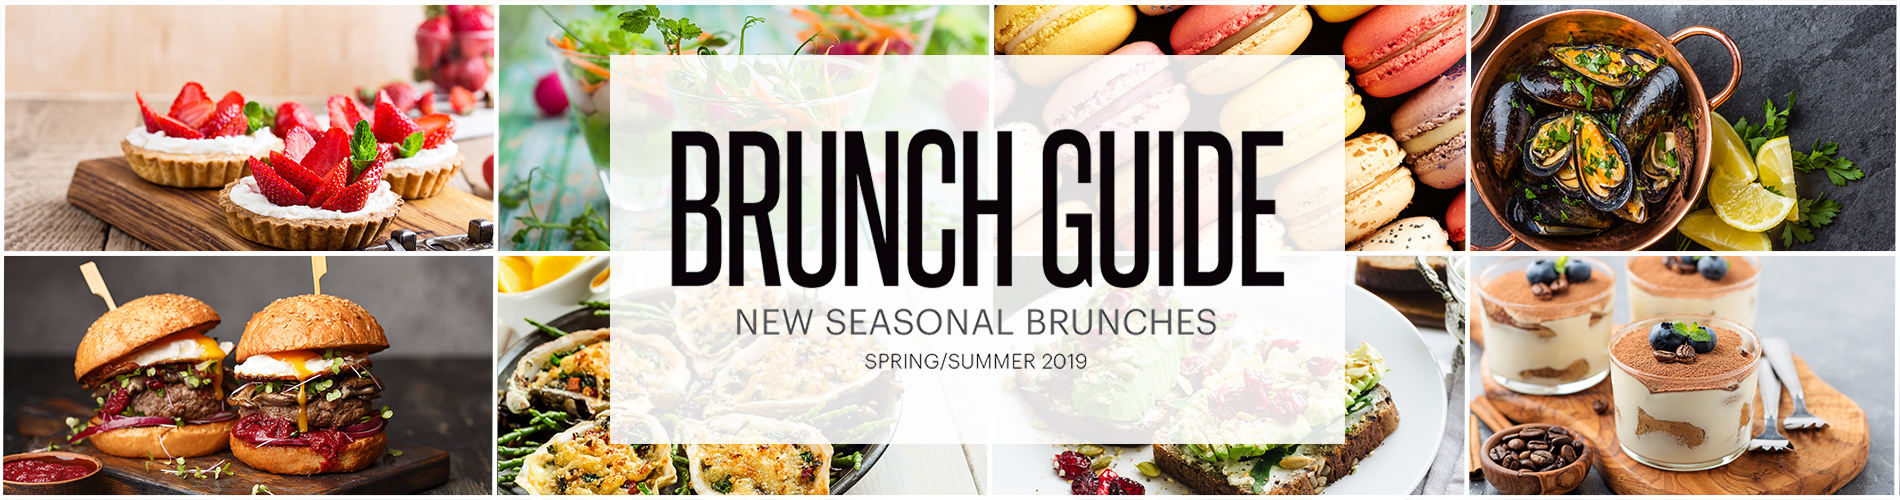 Brunch Guide 2019 |  New Seasonal Brunches | Spring/Summer 2019